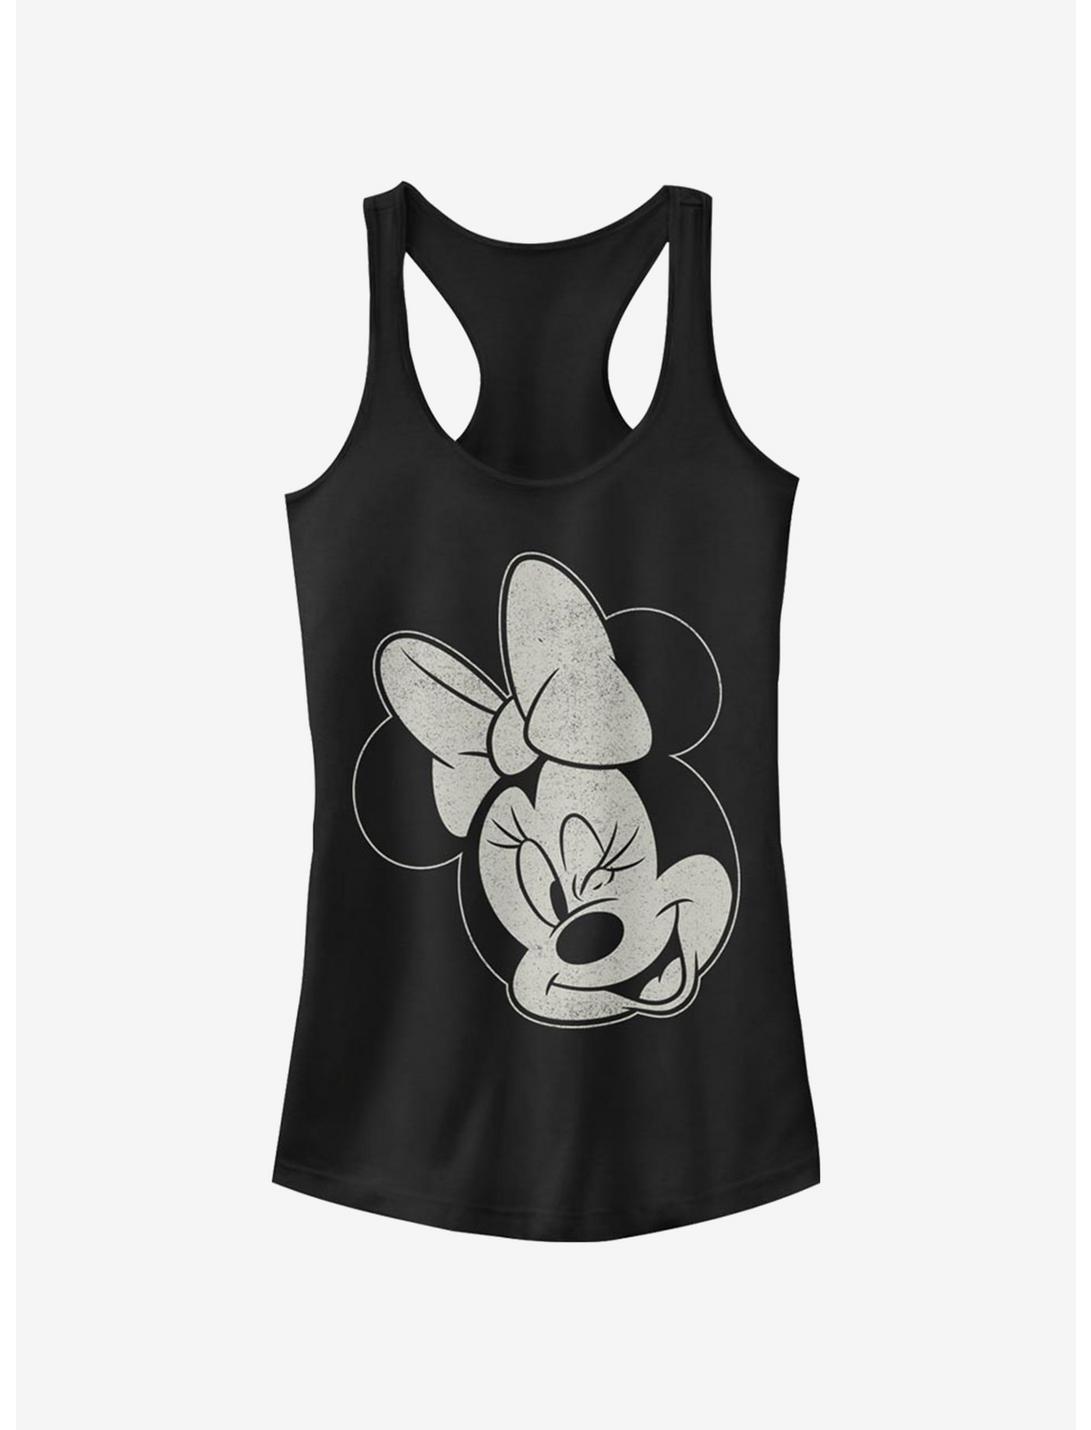 Disney Mickey Mouse Minnie Wink Girls Tank, BLACK, hi-res